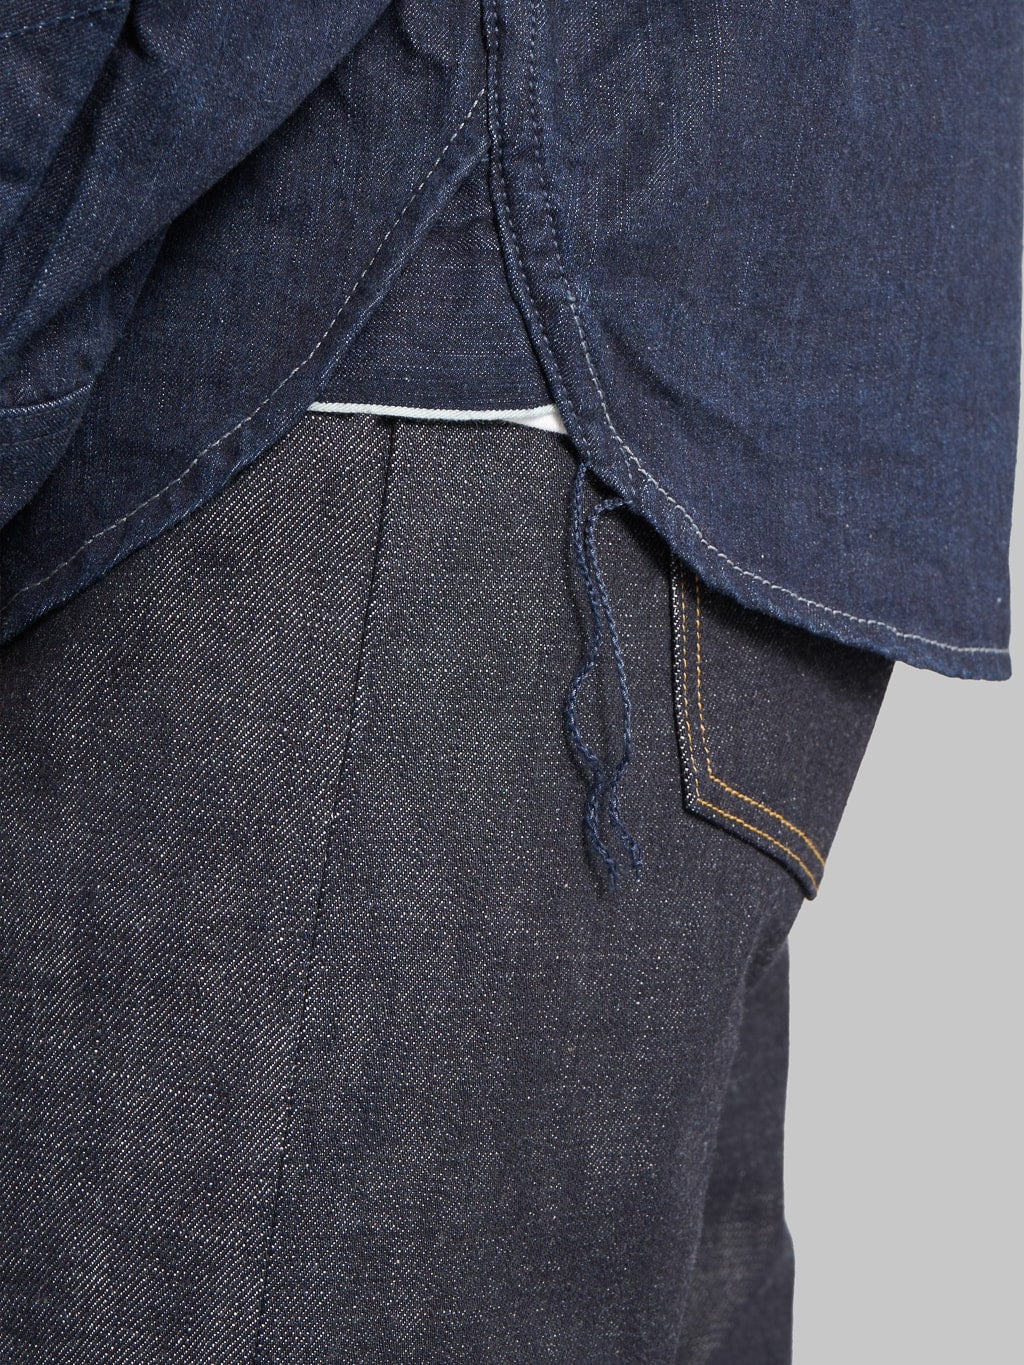 Ues Traveling Shirt Indigo selvedge denim chain stitching detail